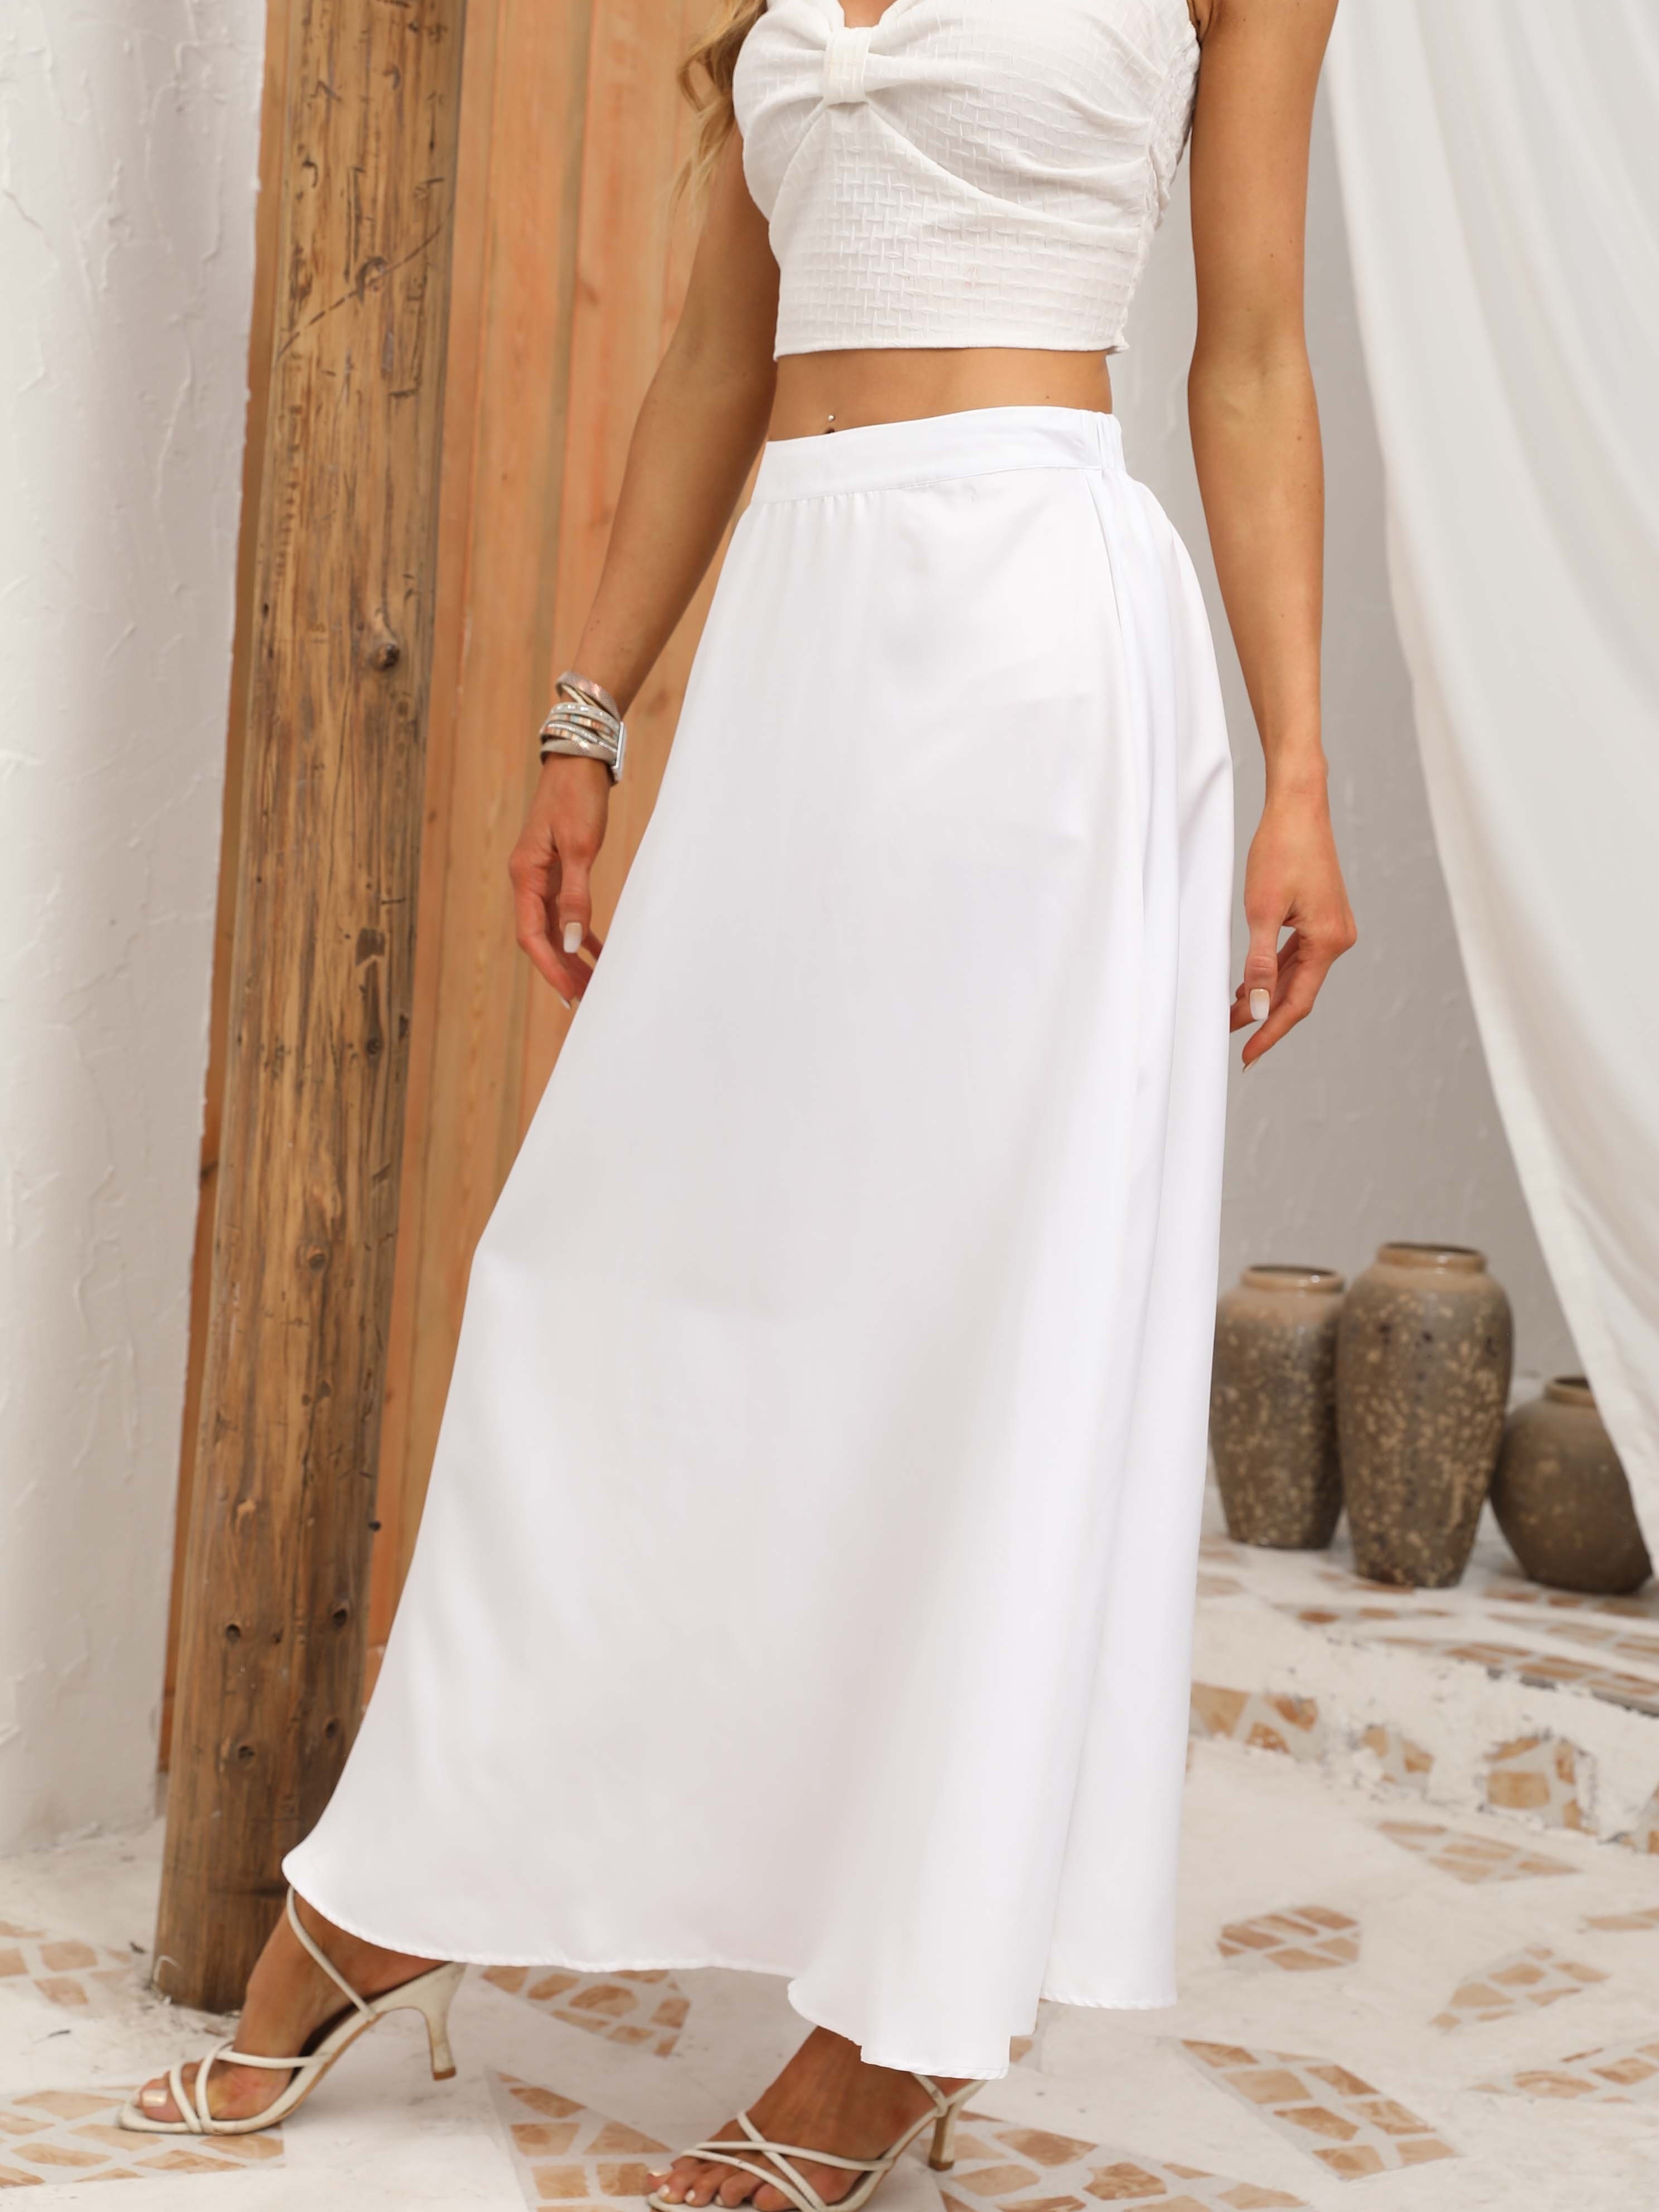 Ruched High Waist Skirts Elegant Solid Versatile Maxi Skirts